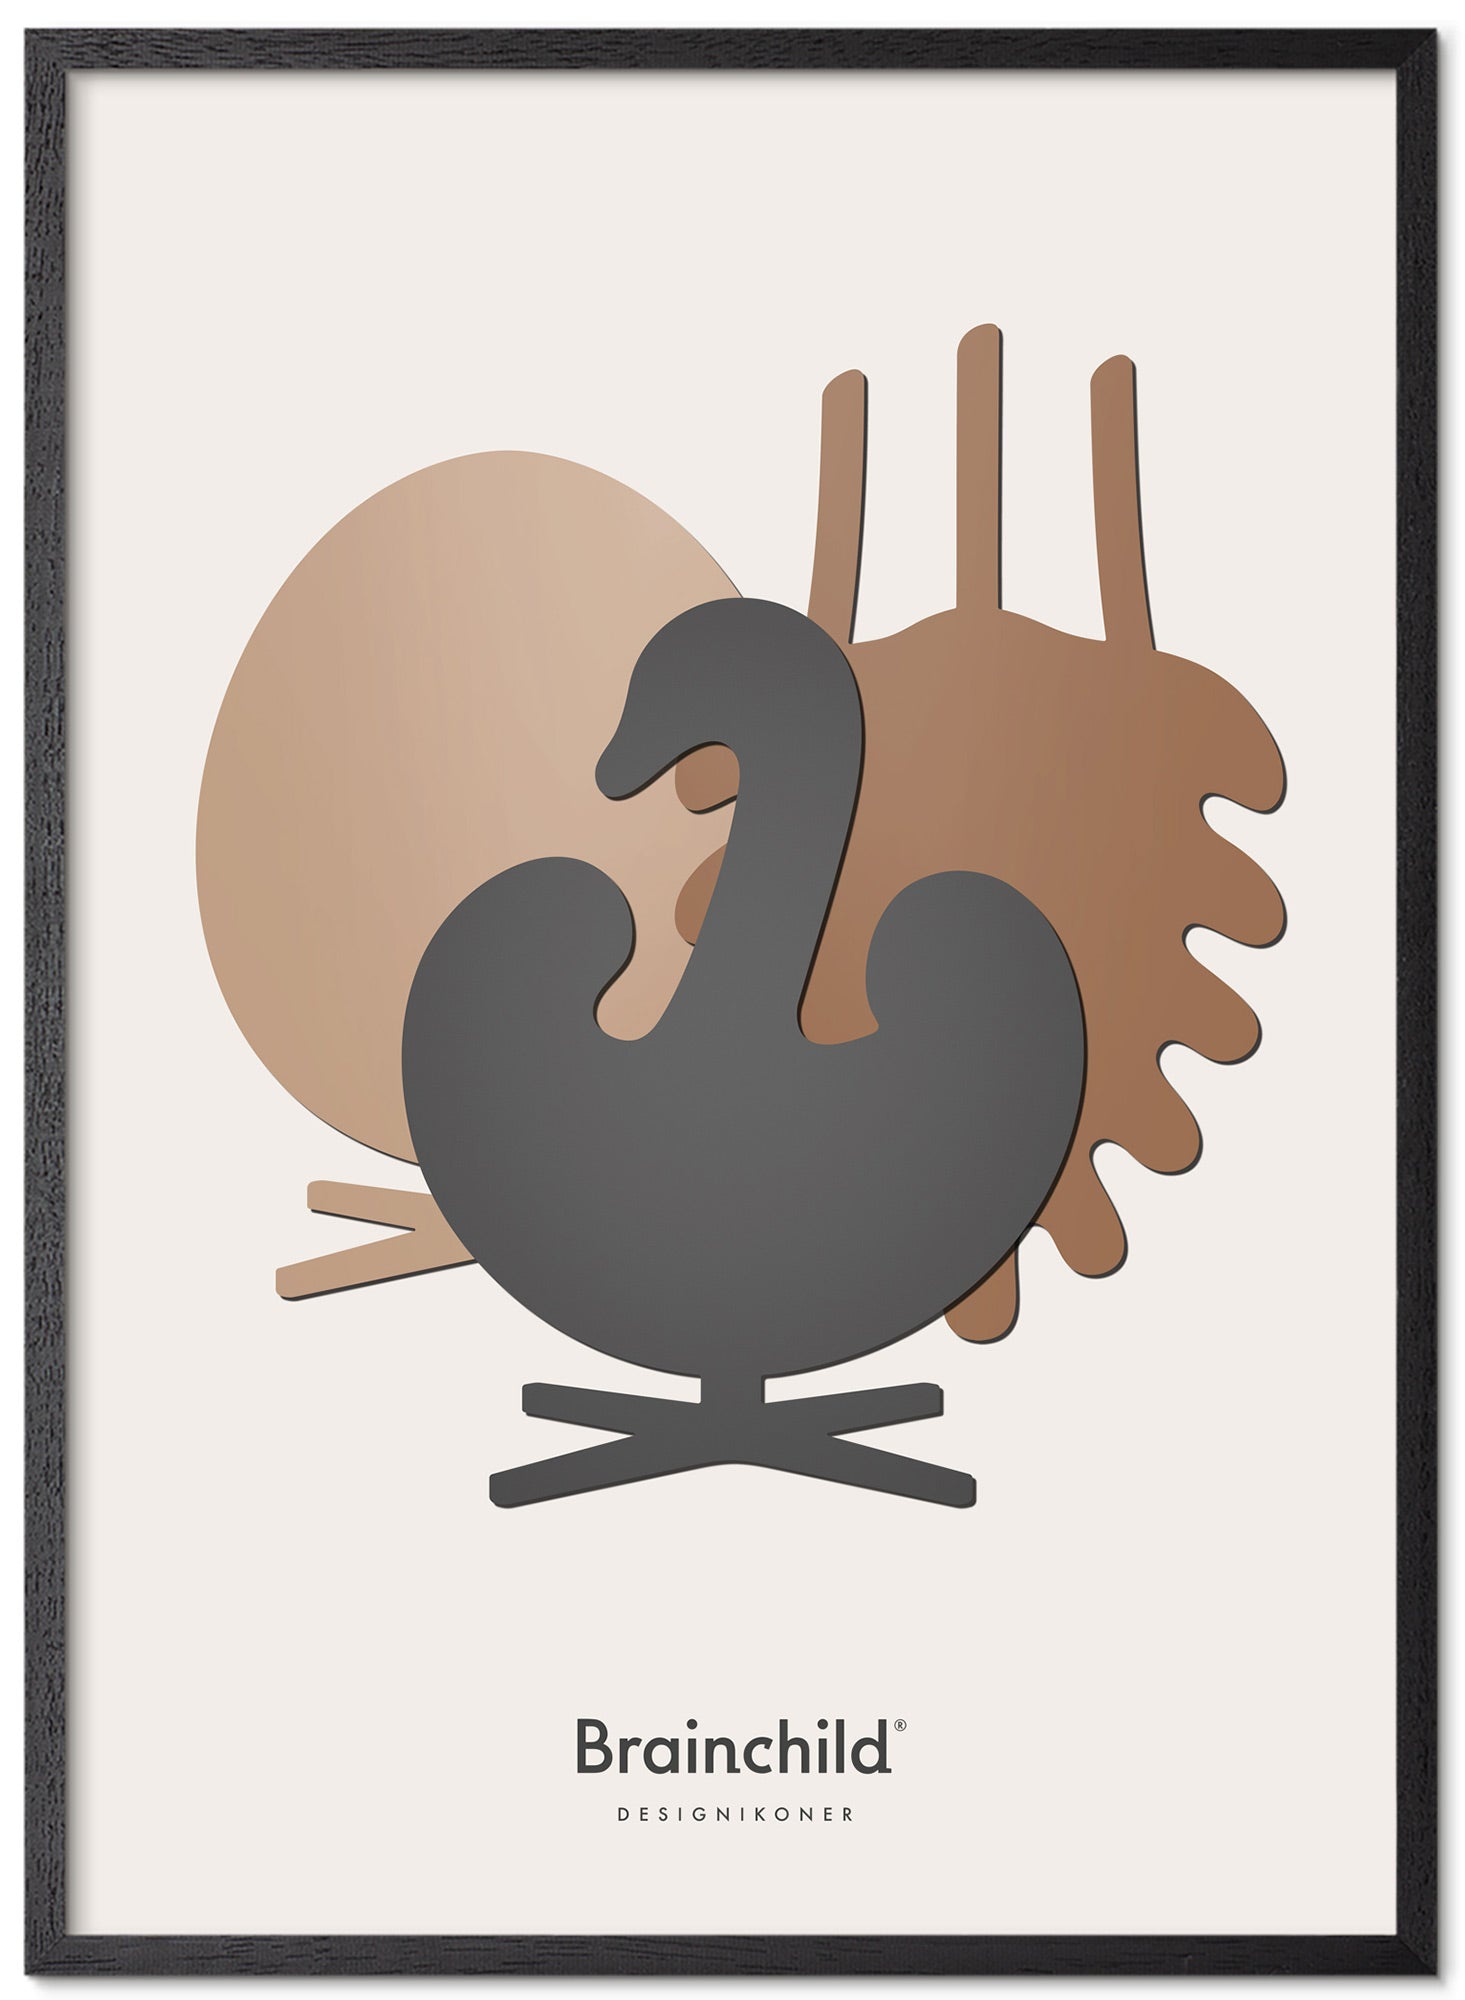 Brainchild Design-Ikonen Poster Symphony Rahmen aus schwarz lackiertem Holz 50x70 cm, hellgrau